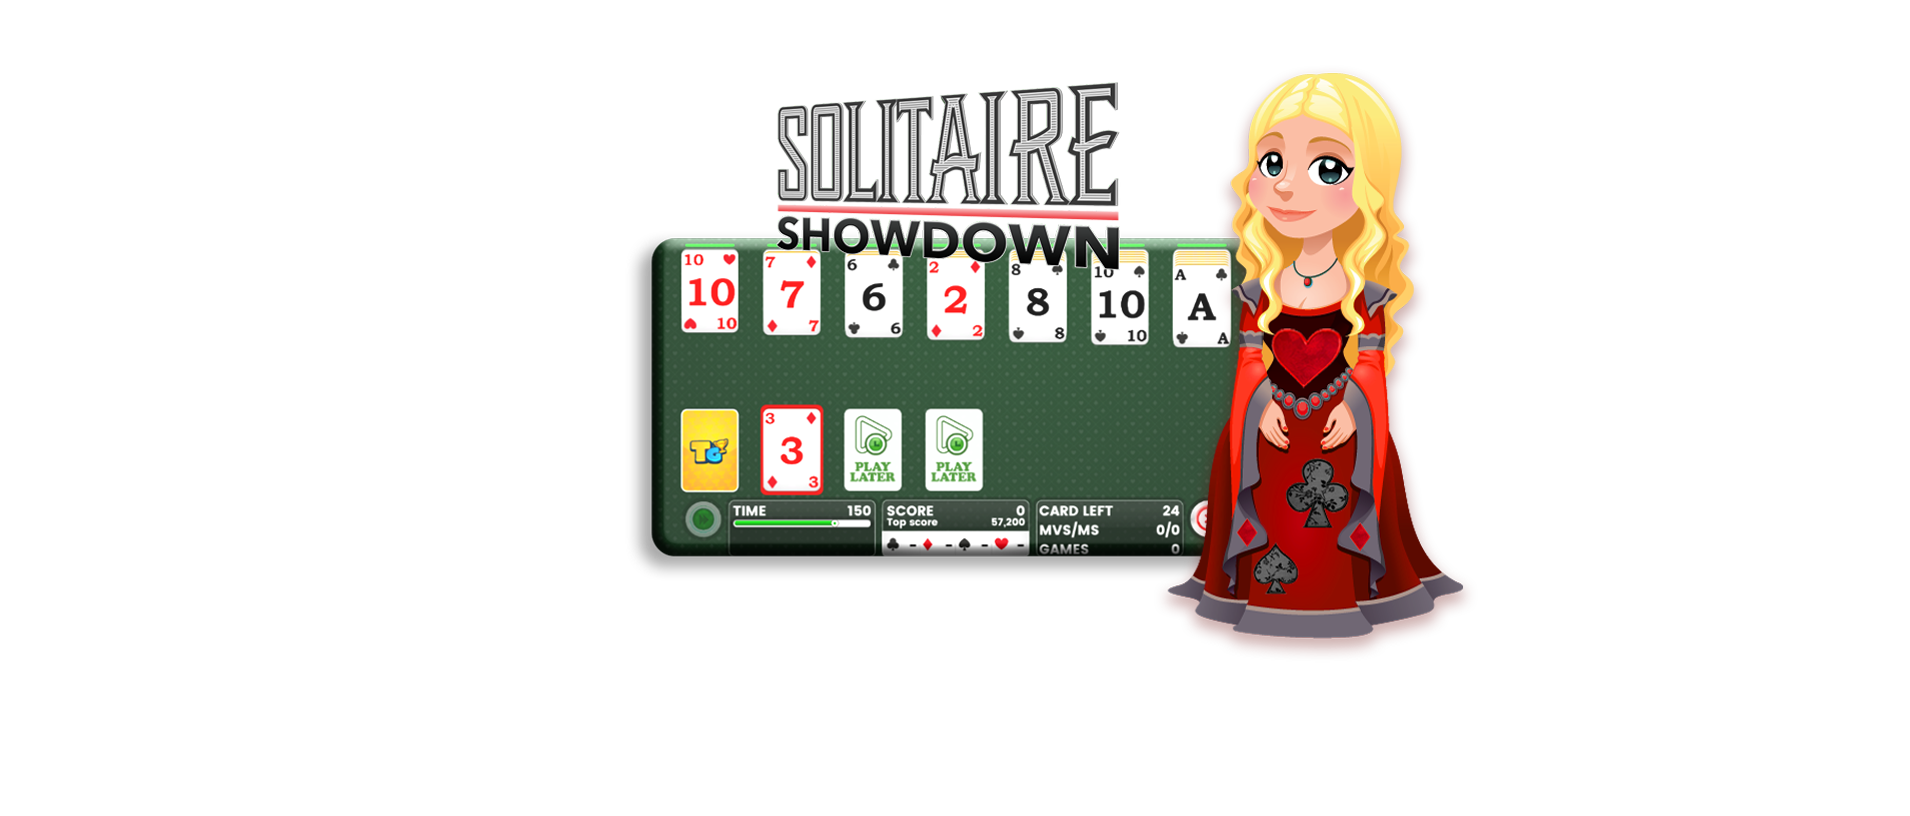 Play Solitaire online. Klondike Solitaire money tournaments.